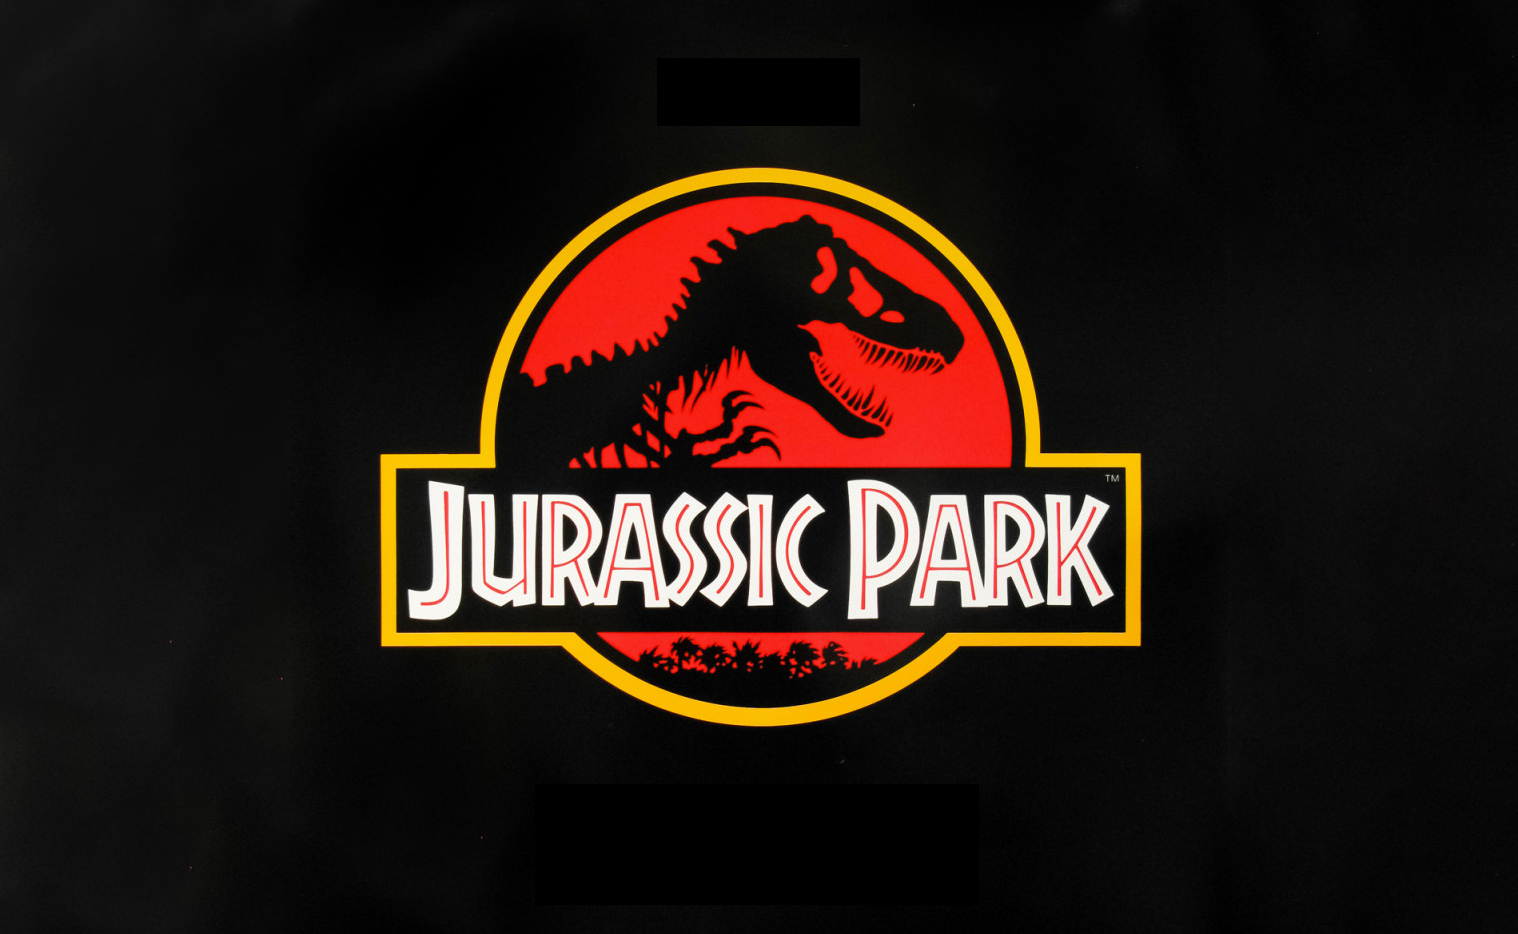 Black background with Jurassic Park logo, a t-rex skeleton.